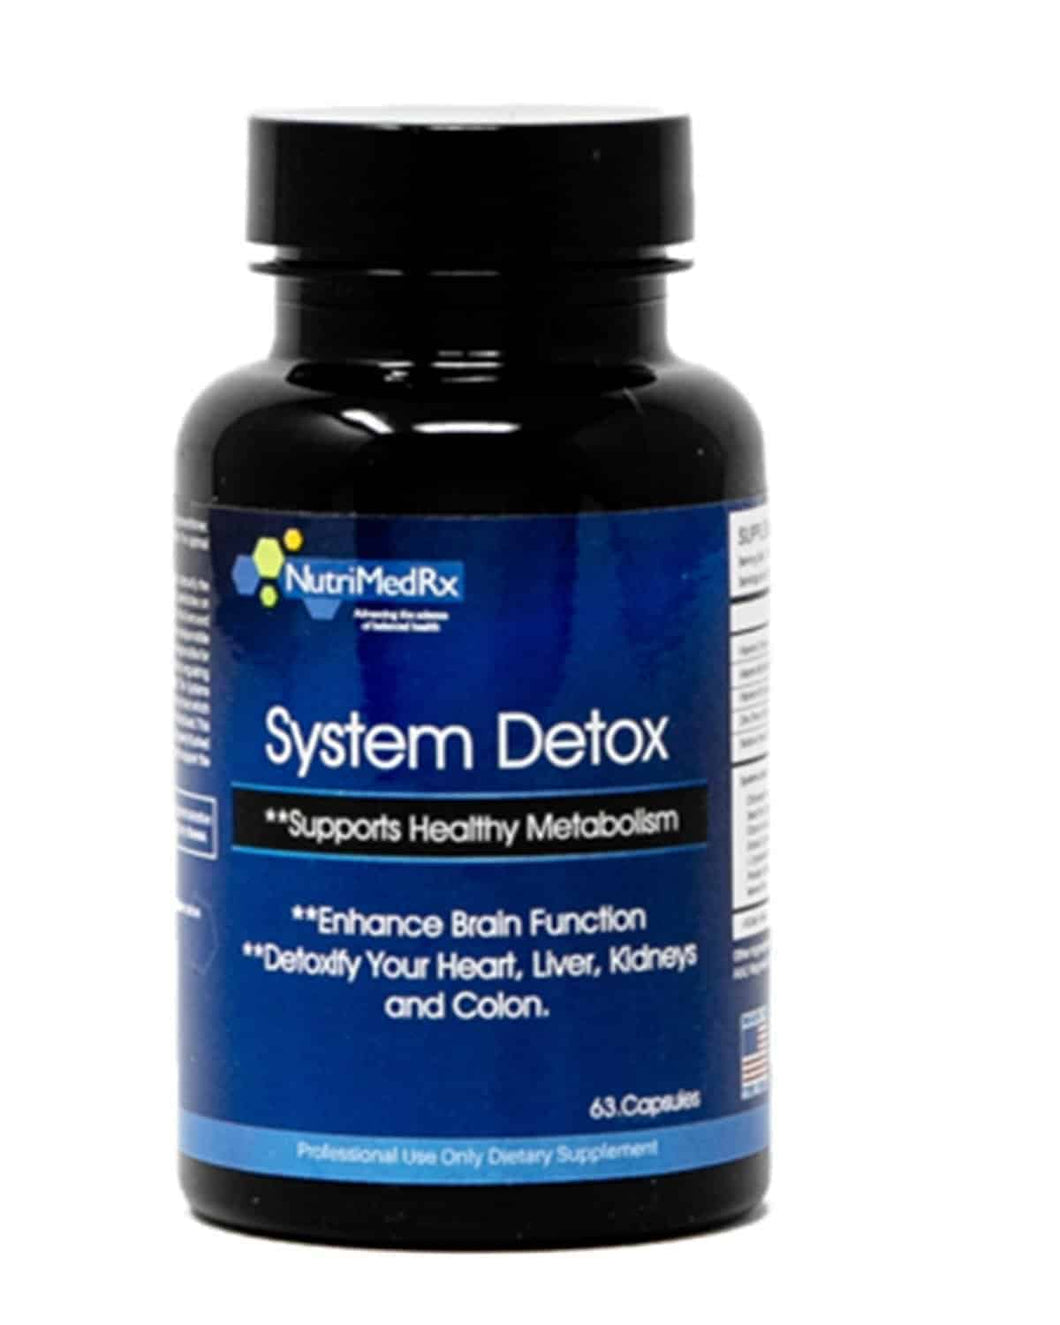 System Detox